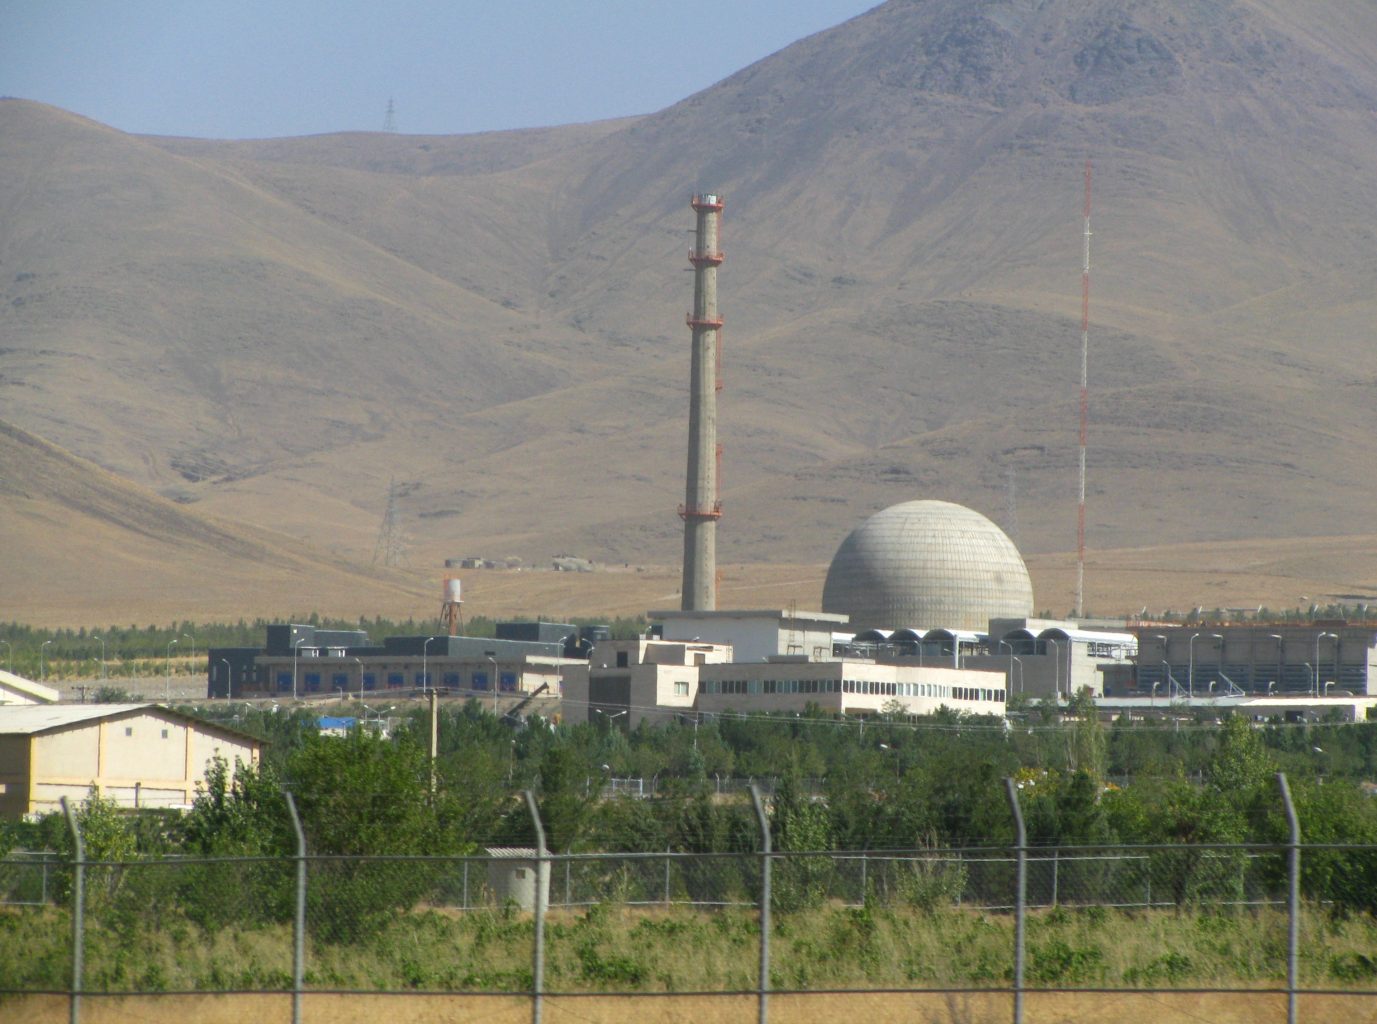 Reactor nuclear iraní Arak IR-40. Imagen: Nanking2012 vía Wikipedia.